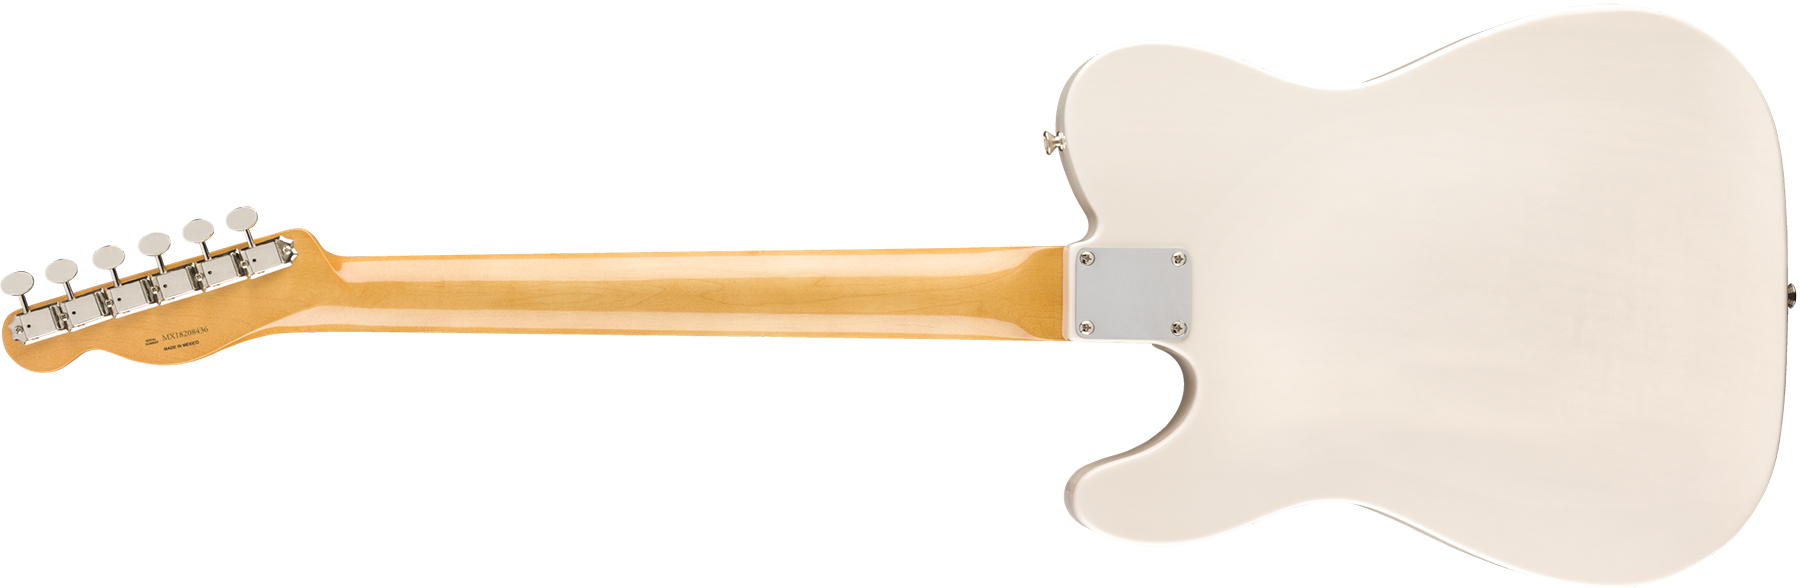 Fender Tele 60s Bigsby Vintera Vintage Mex Pf - White Blonde - Tel shape electric guitar - Variation 1